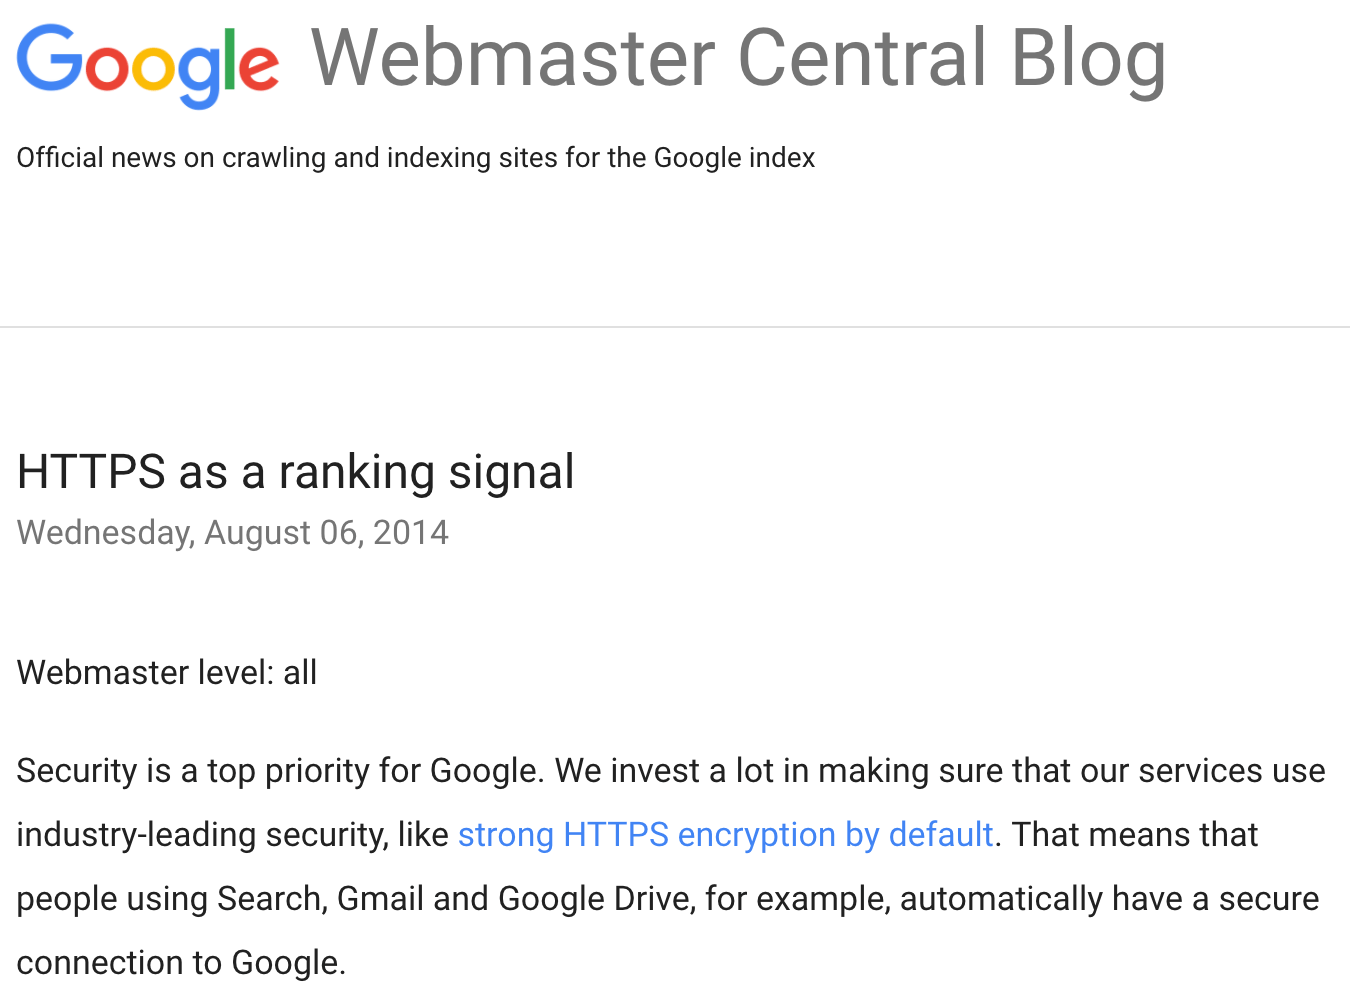 HTTPS یک سیگنال رتبه بندی تایید شده Google است. 